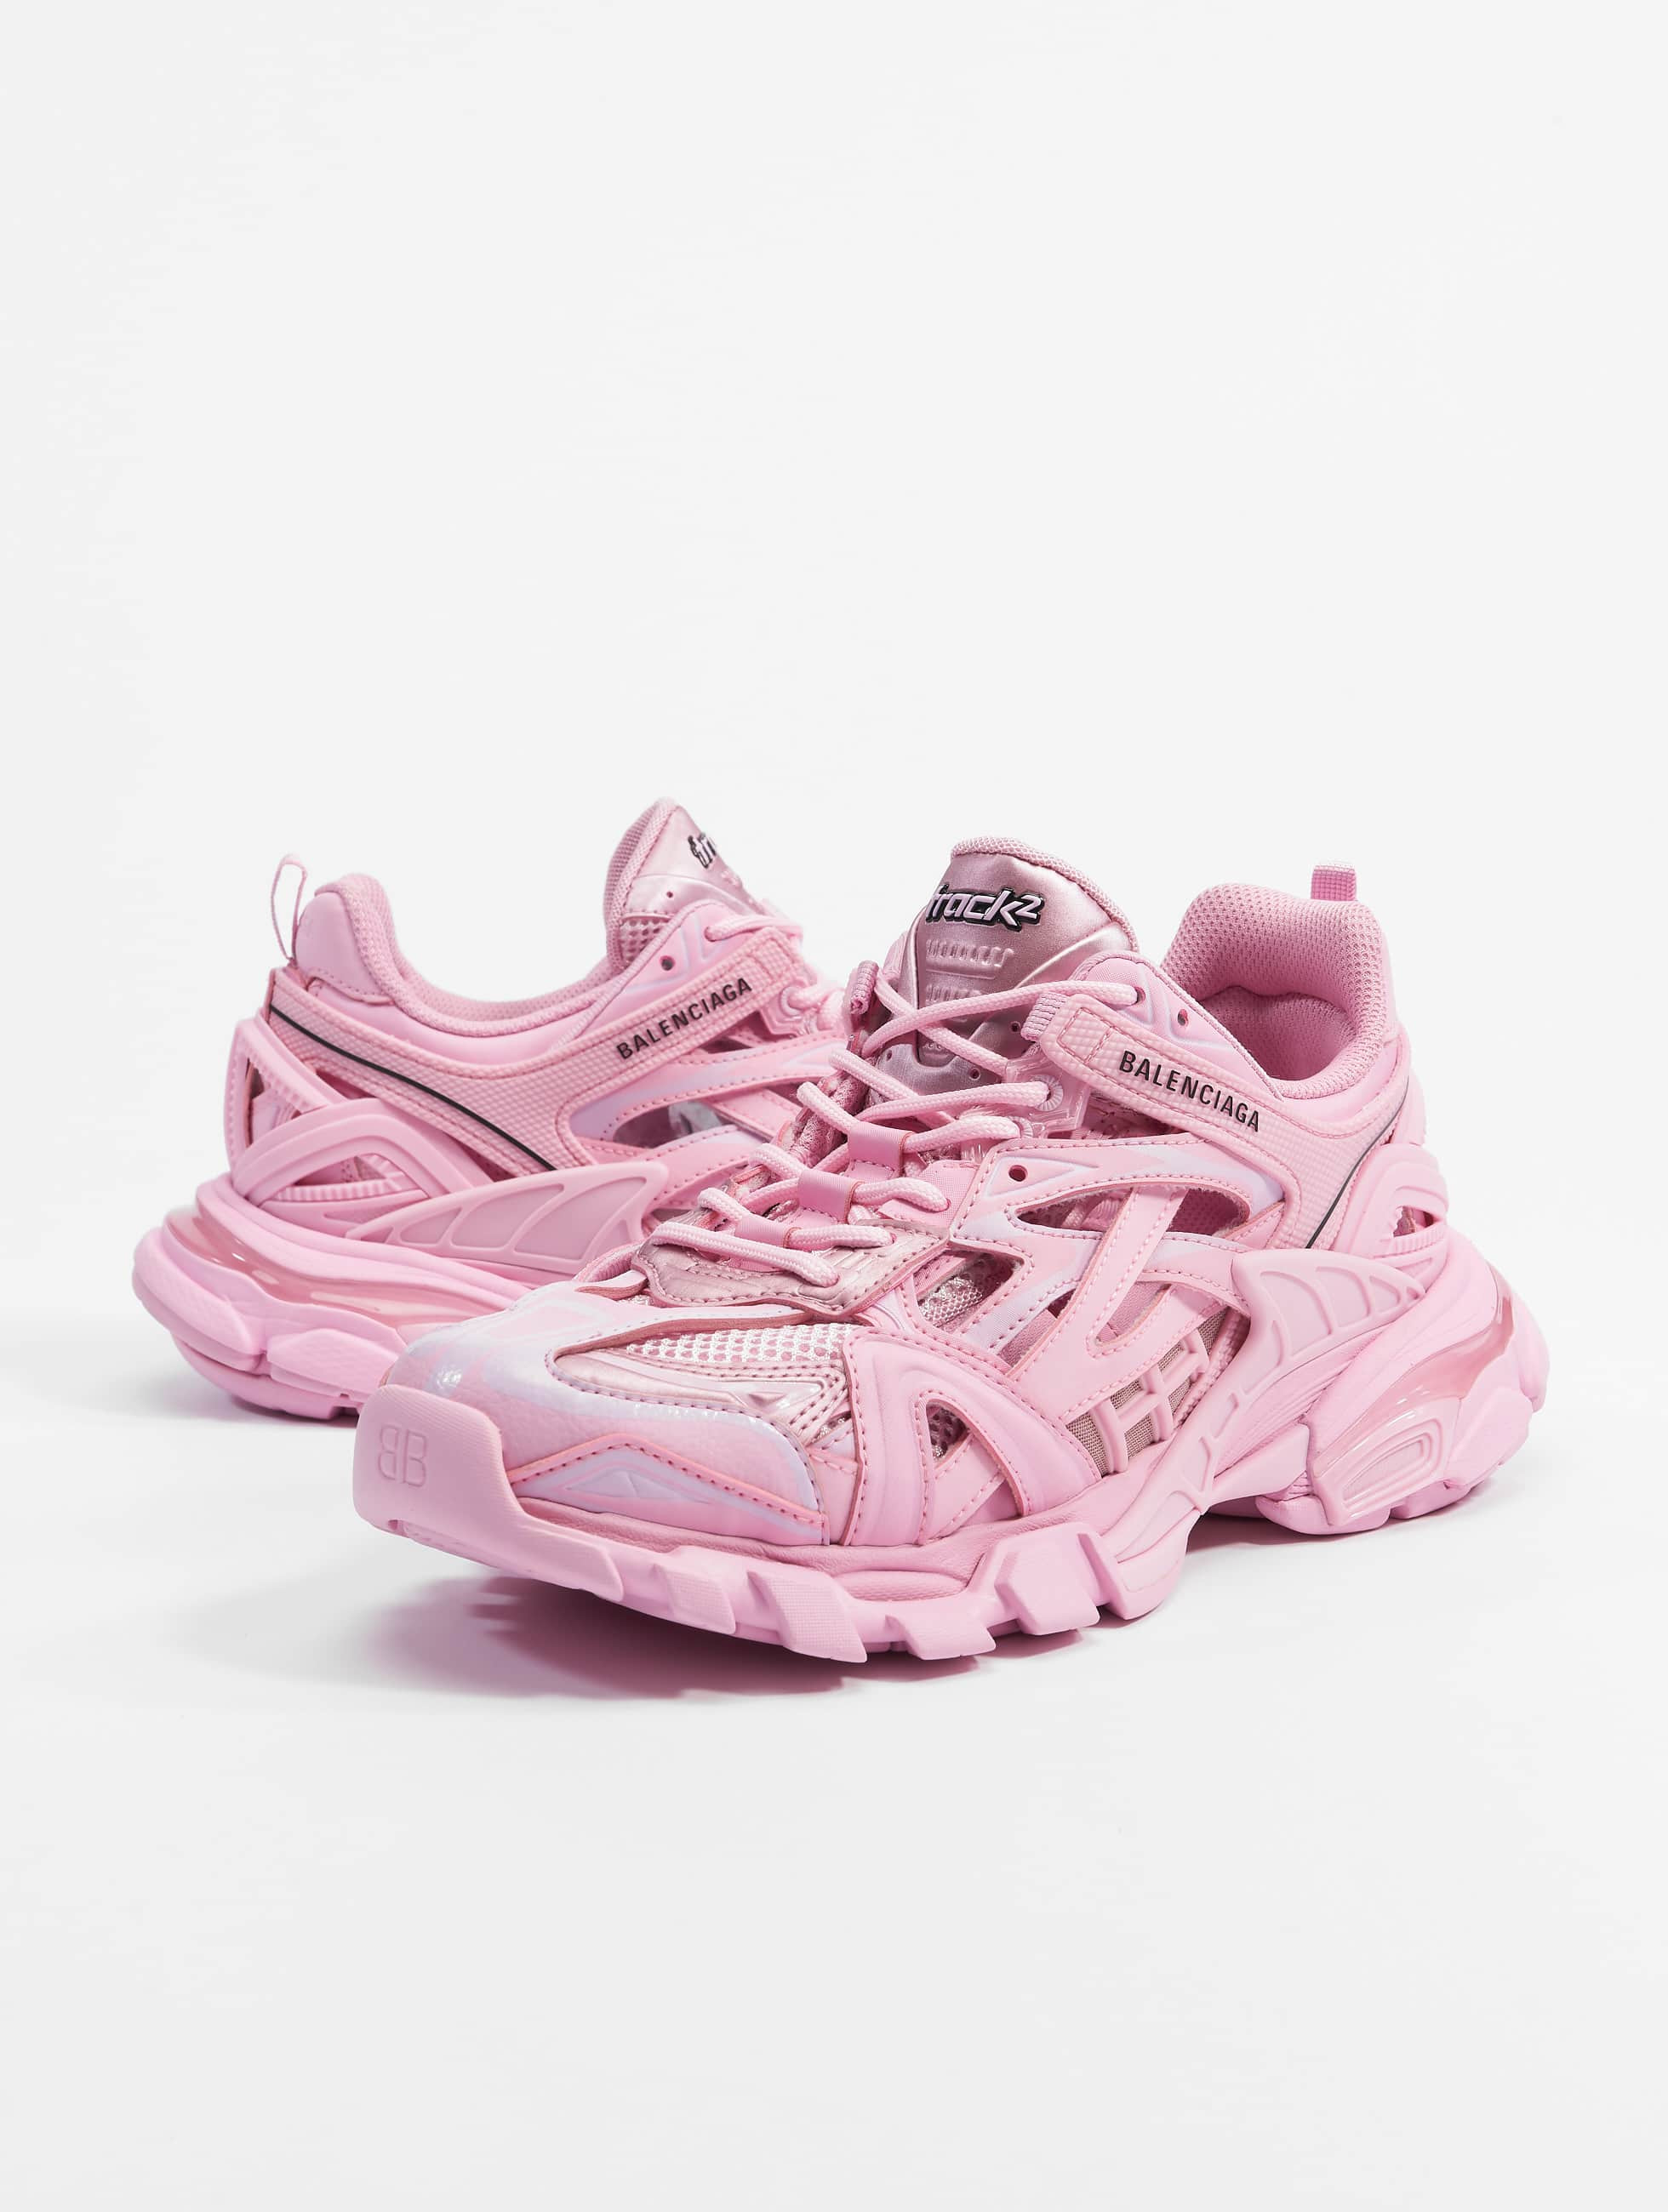 Sko / Sneakers TRACK.2 i pink 909795